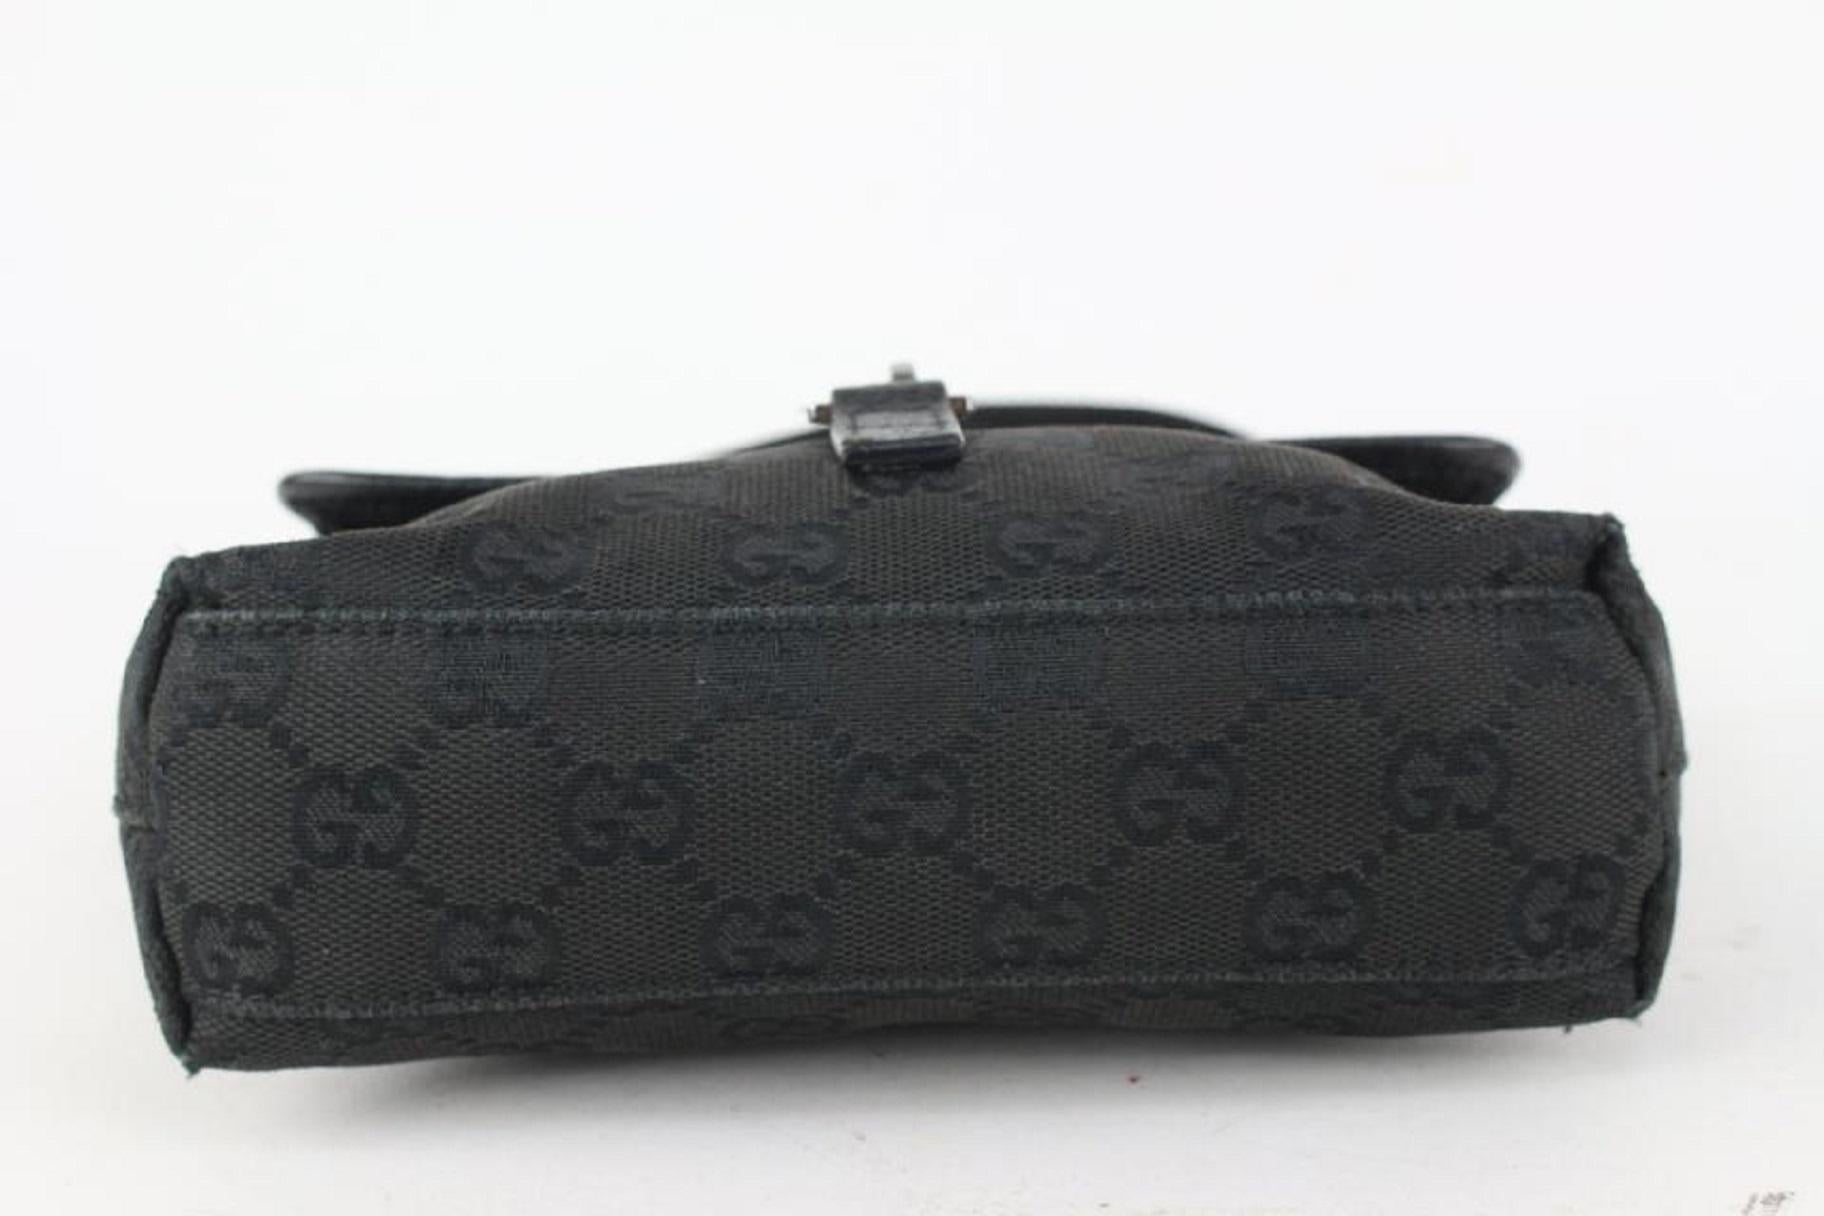 Gucci Black Monogram GG Belt Bag Fanny Pack Waist Pouch 927gk26 For Sale 2